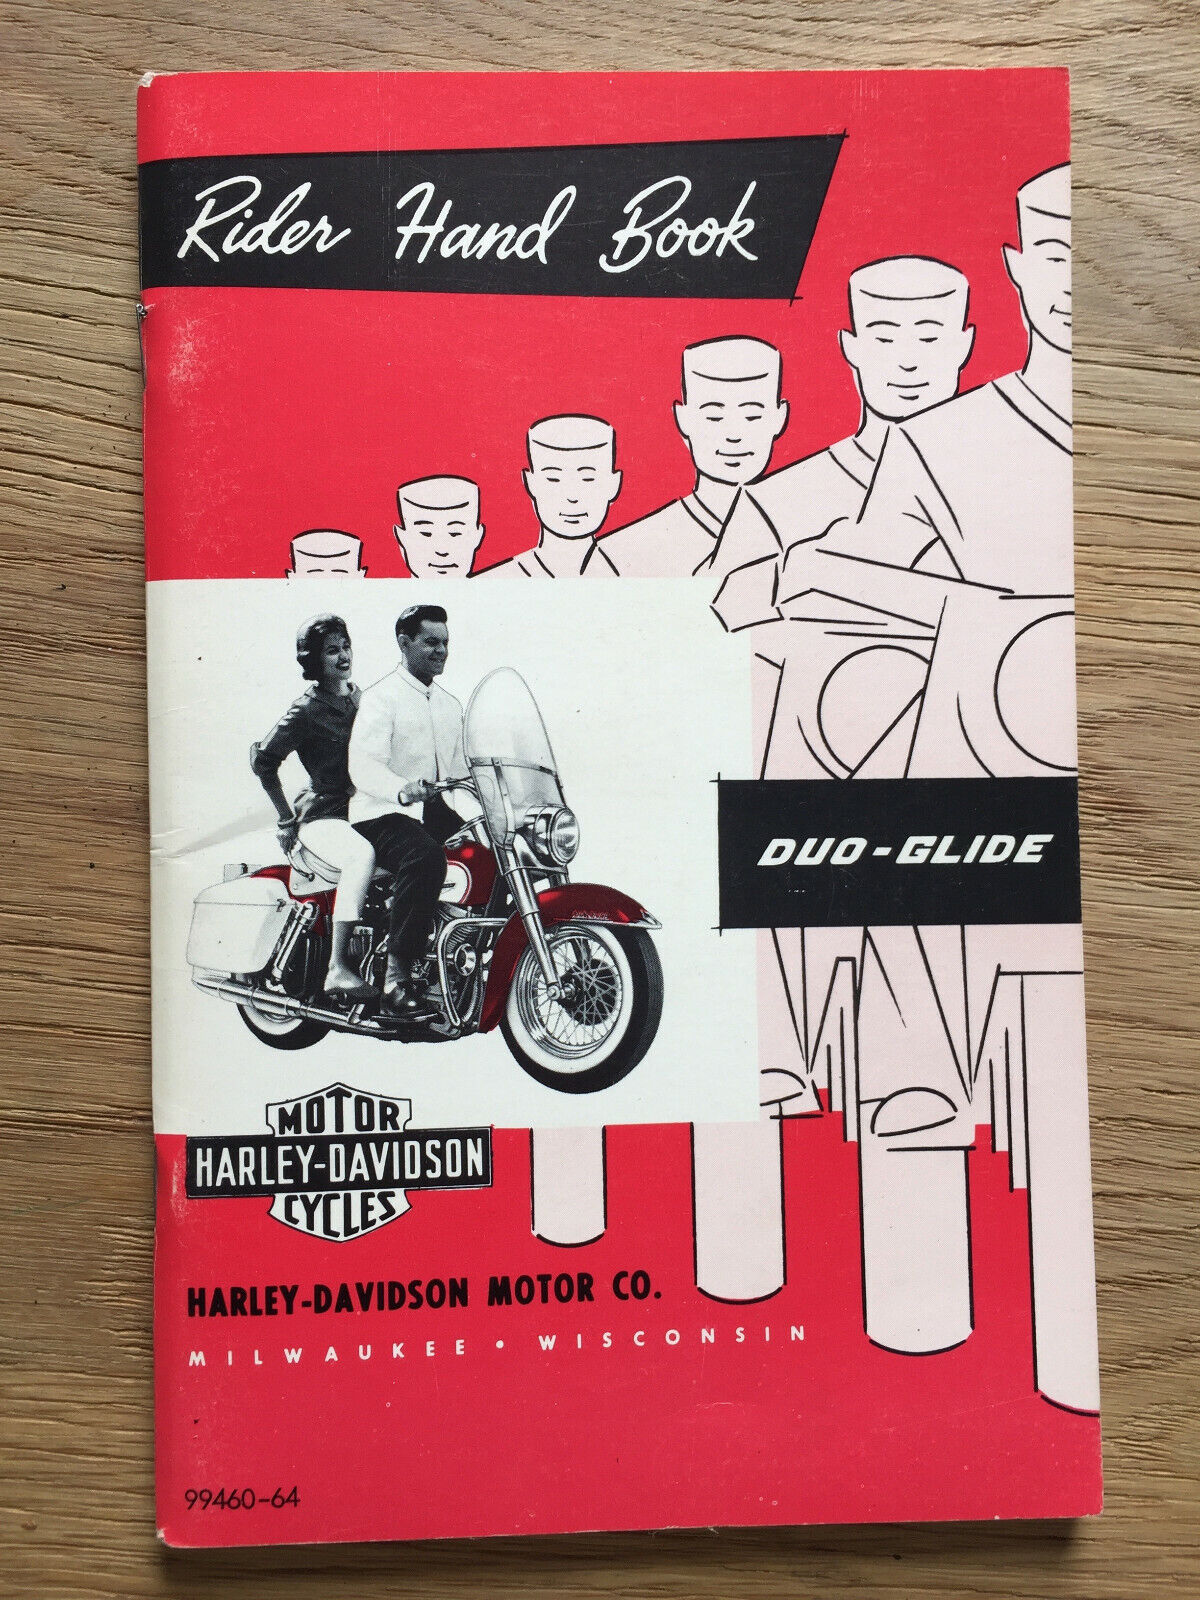 NOS Harley Davidson Duo Glide Panhead Rider Hand Book Owner's Manual 99460-64 2022, kupowanie bomb